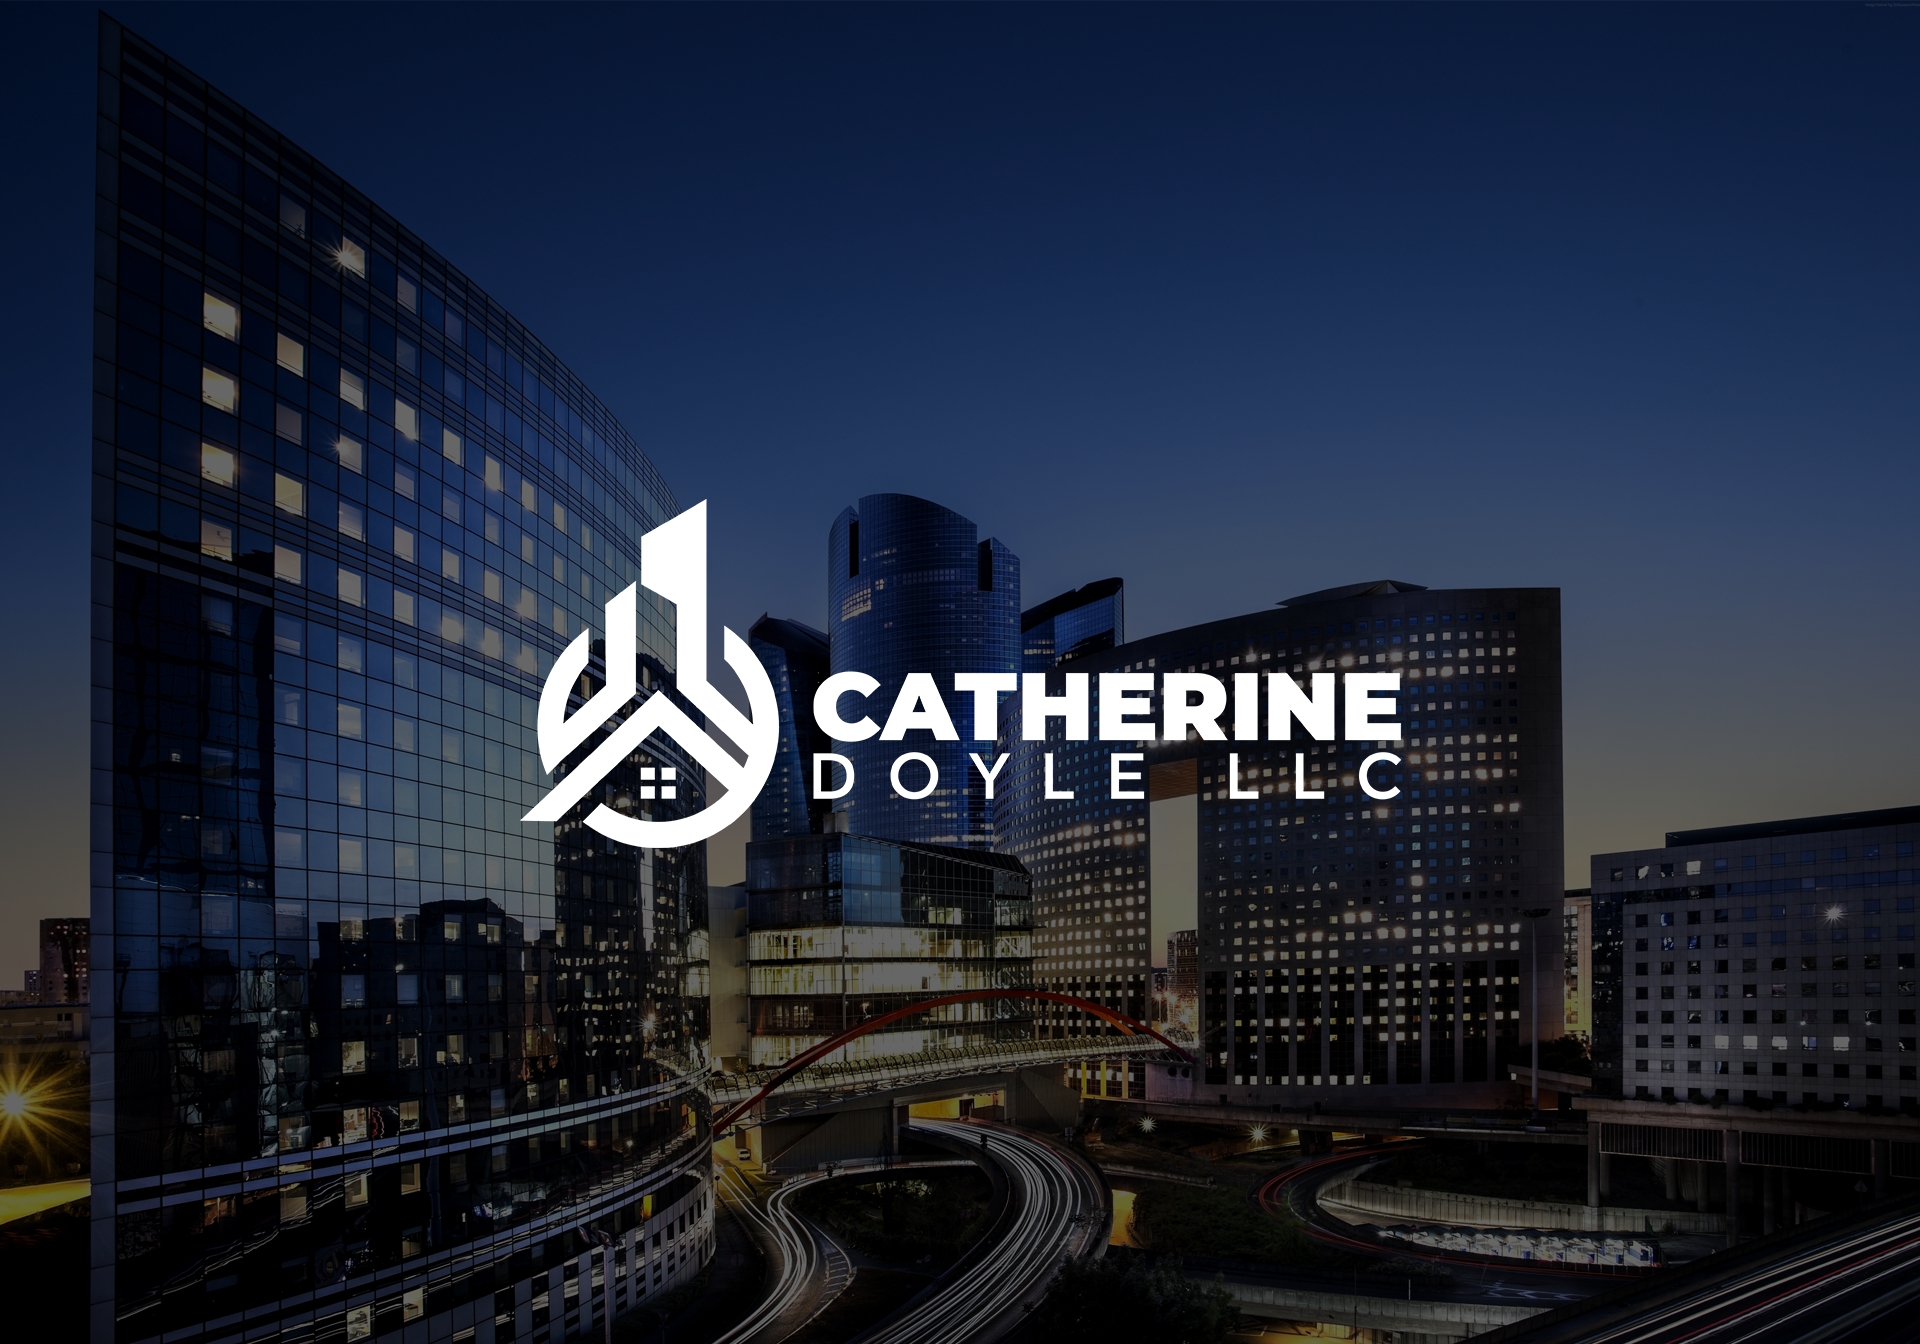 Catherine-Doyle-LLC_06